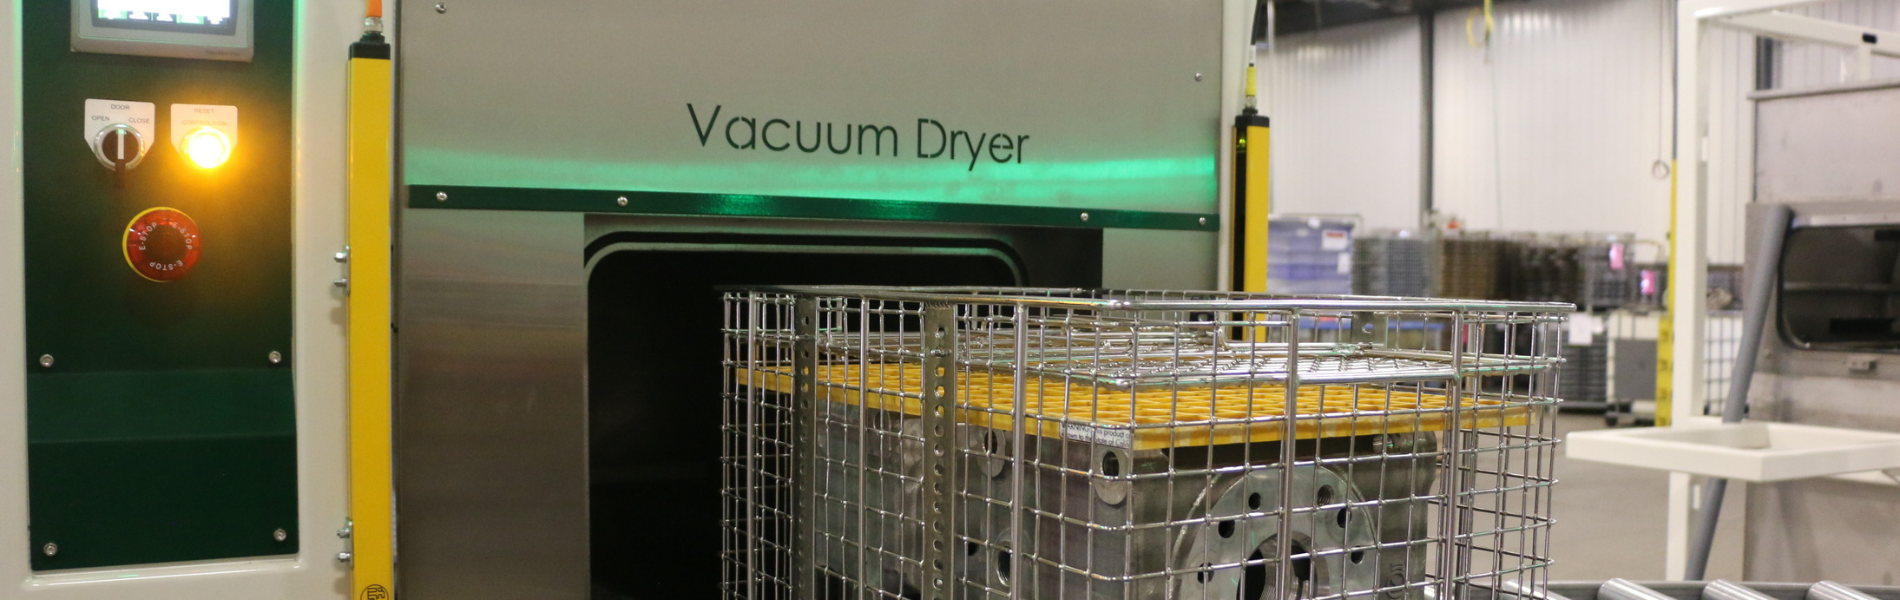 vacuum-dryer-header2